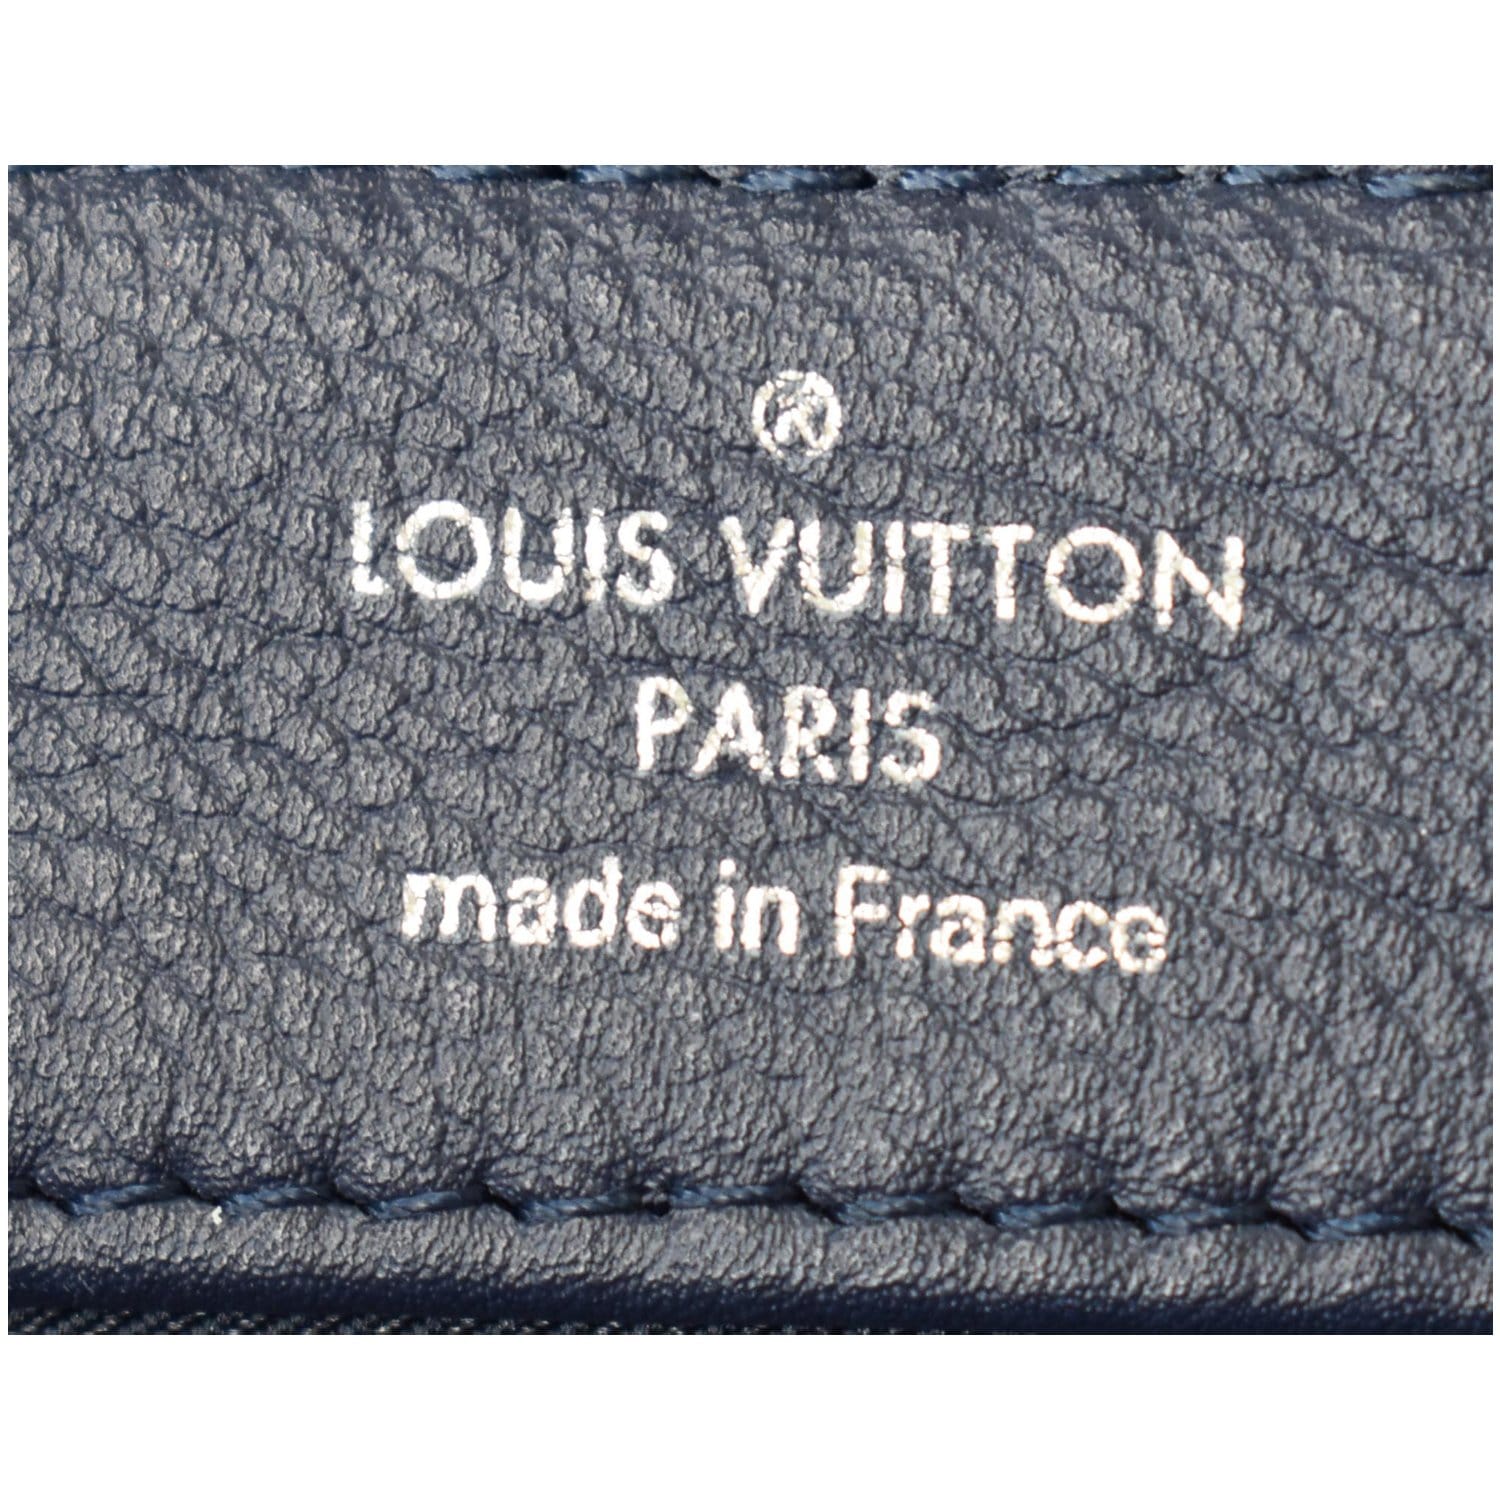 LOUIS VUITTON Lockme II BB Pebbled Leather Shoulder Bag Blue - 25% OFF